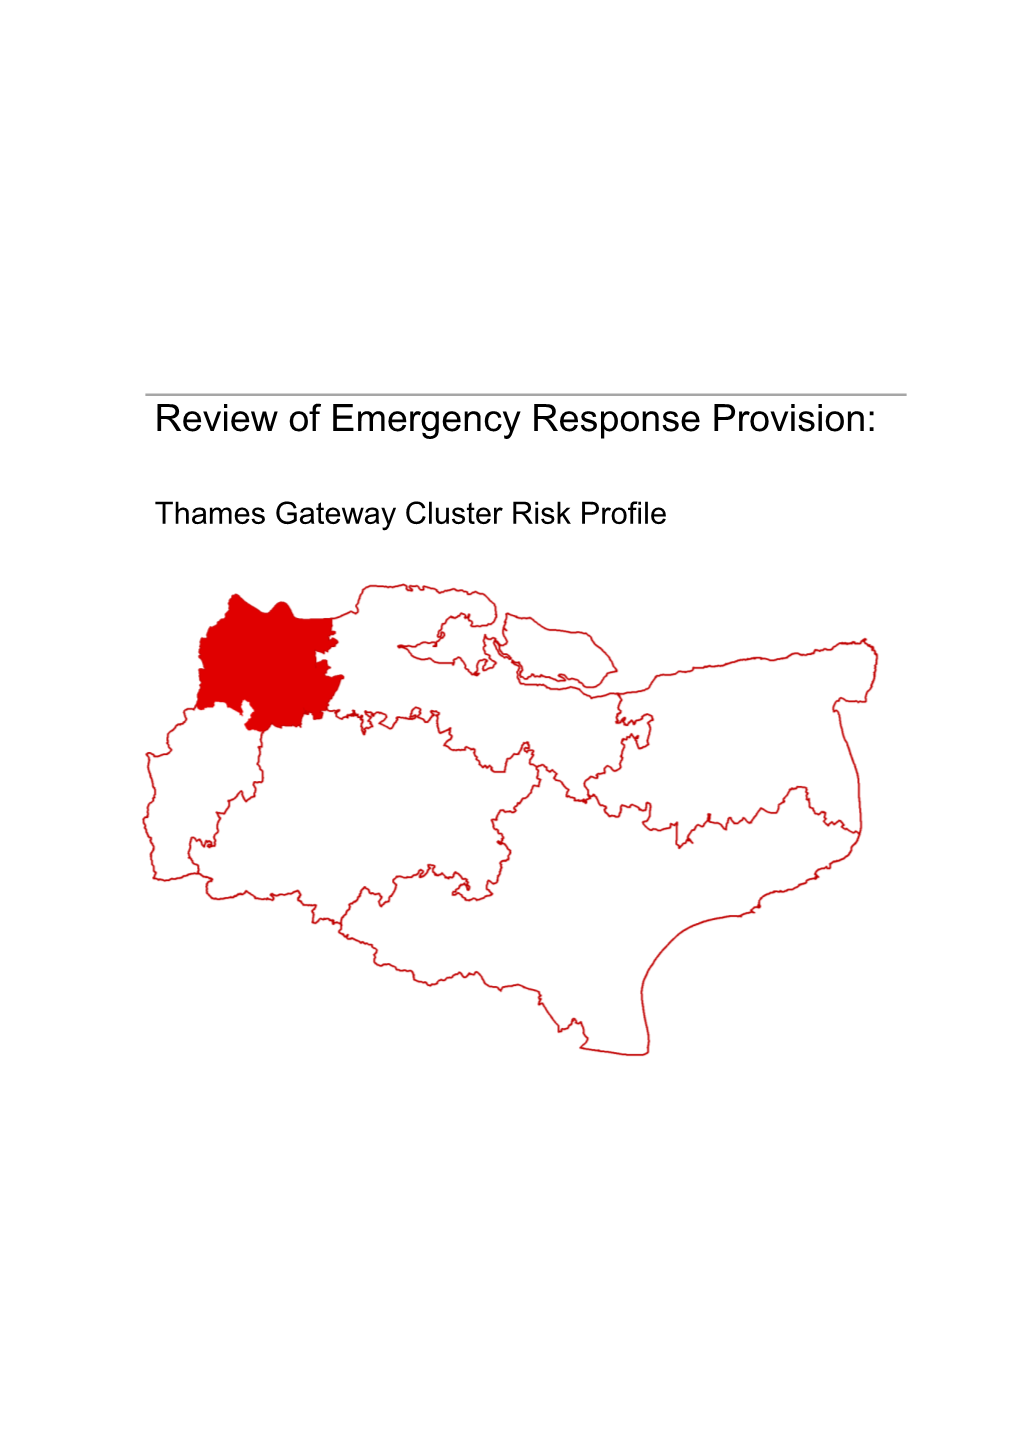 Thames Gateway Risk Profile